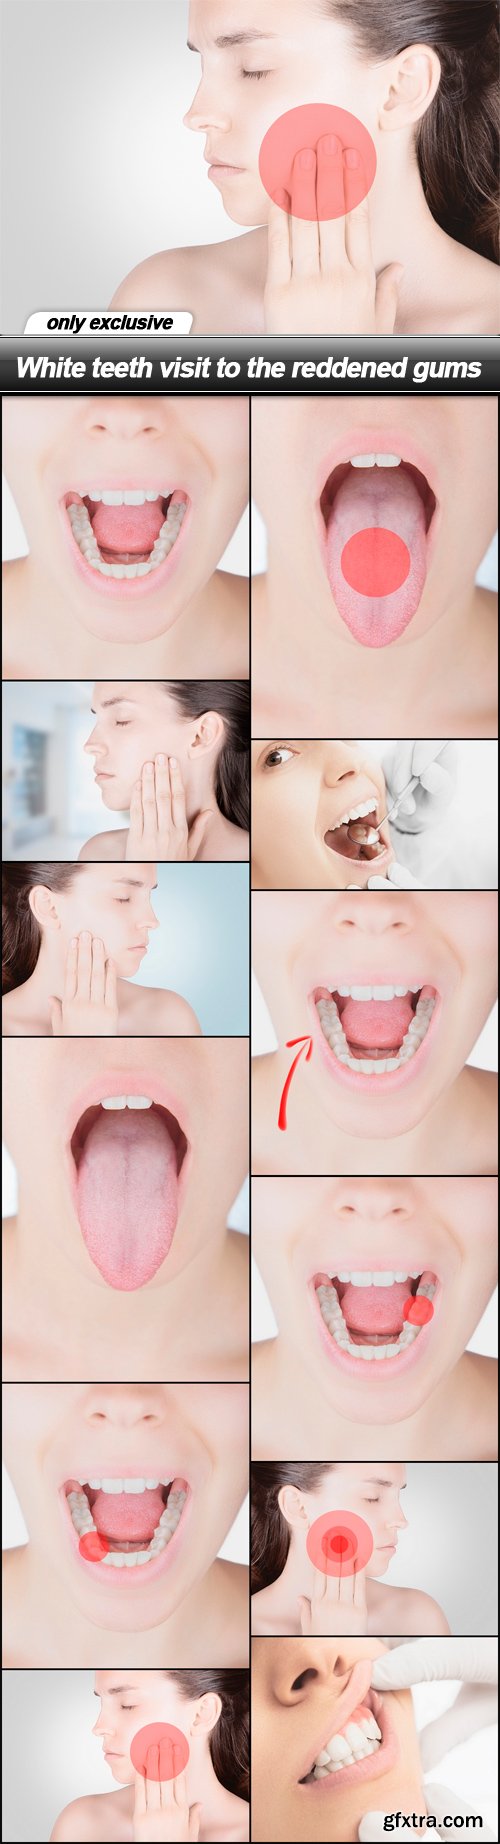 White teeth visit to the reddened gums - 12 UHQ JPEG